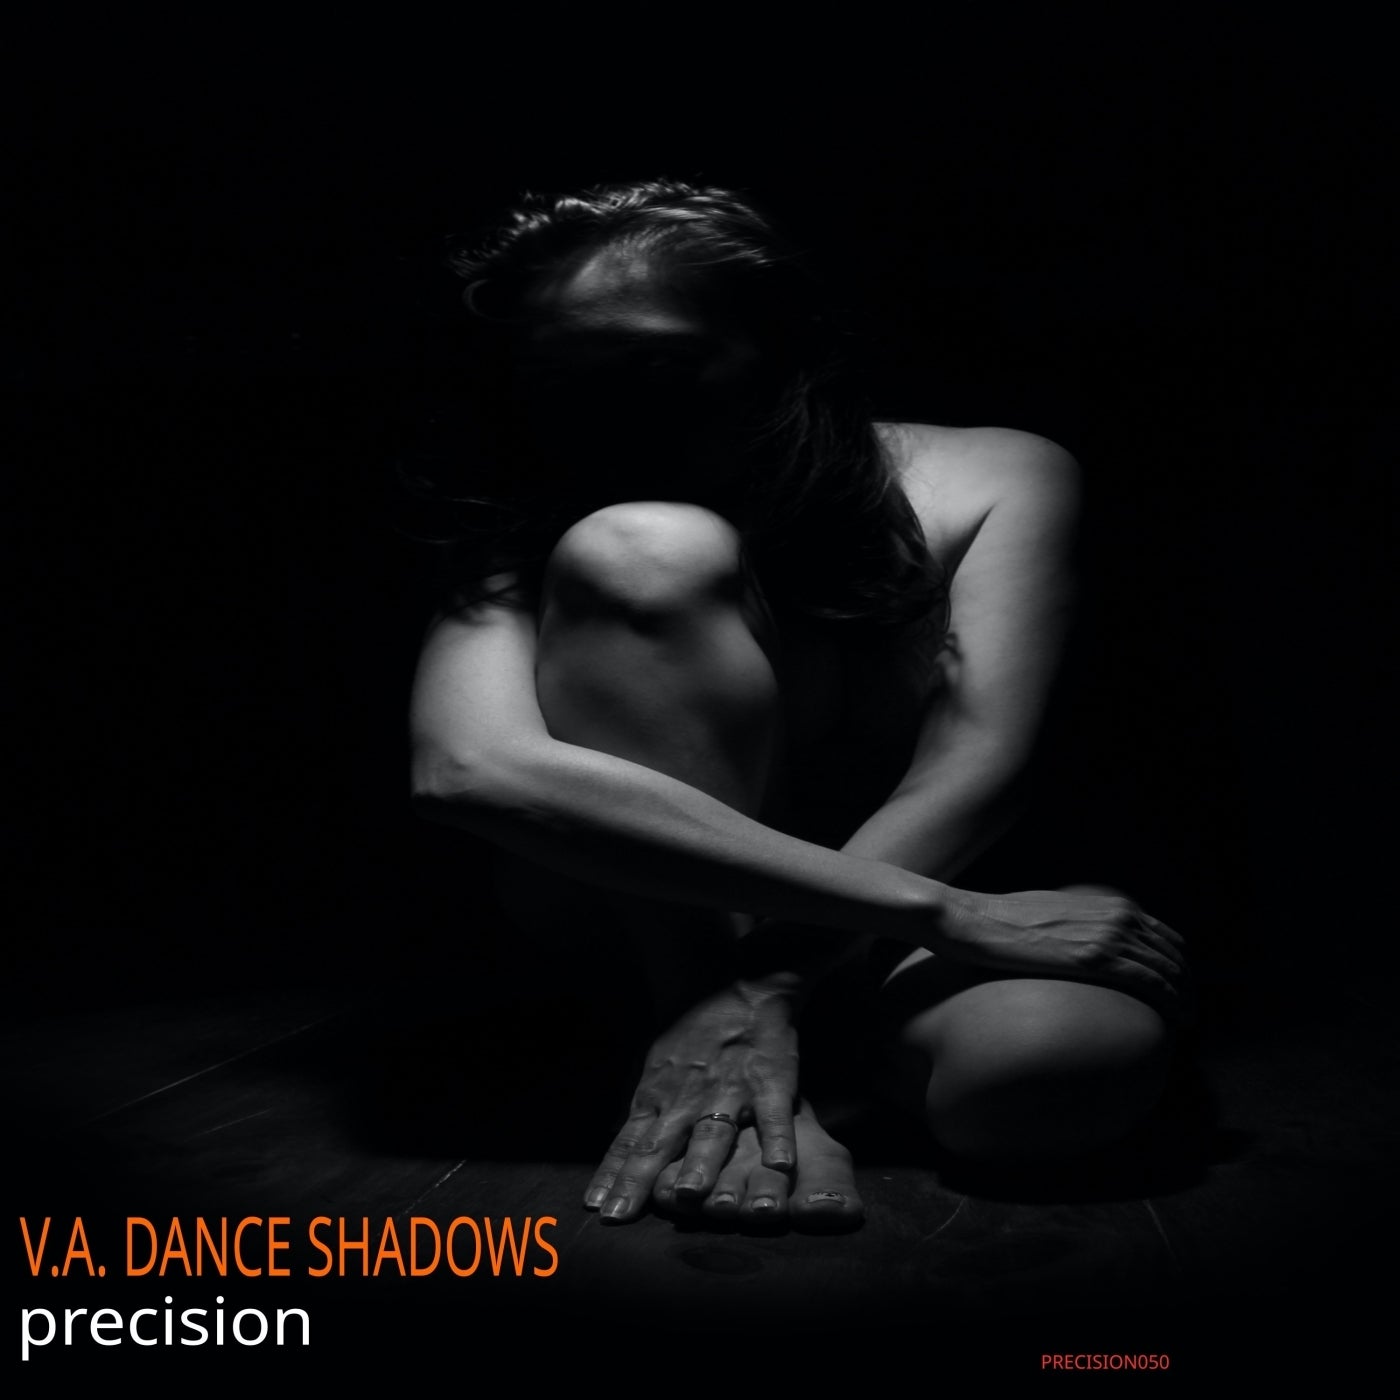 V.A. Dance Shadows